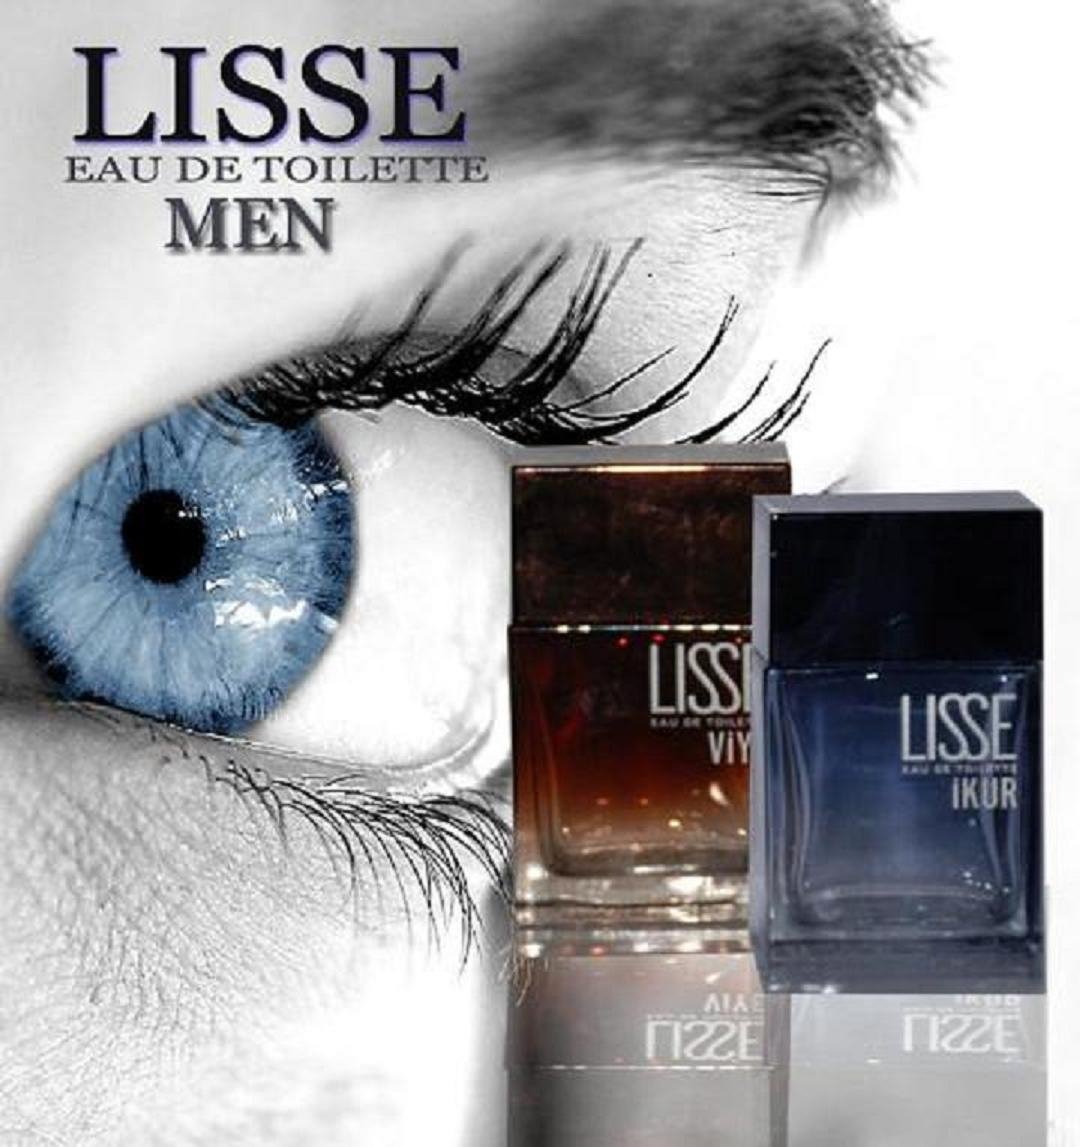 Perfumes & Cosmetics: Men's perfume brand Photos in Cheyenne